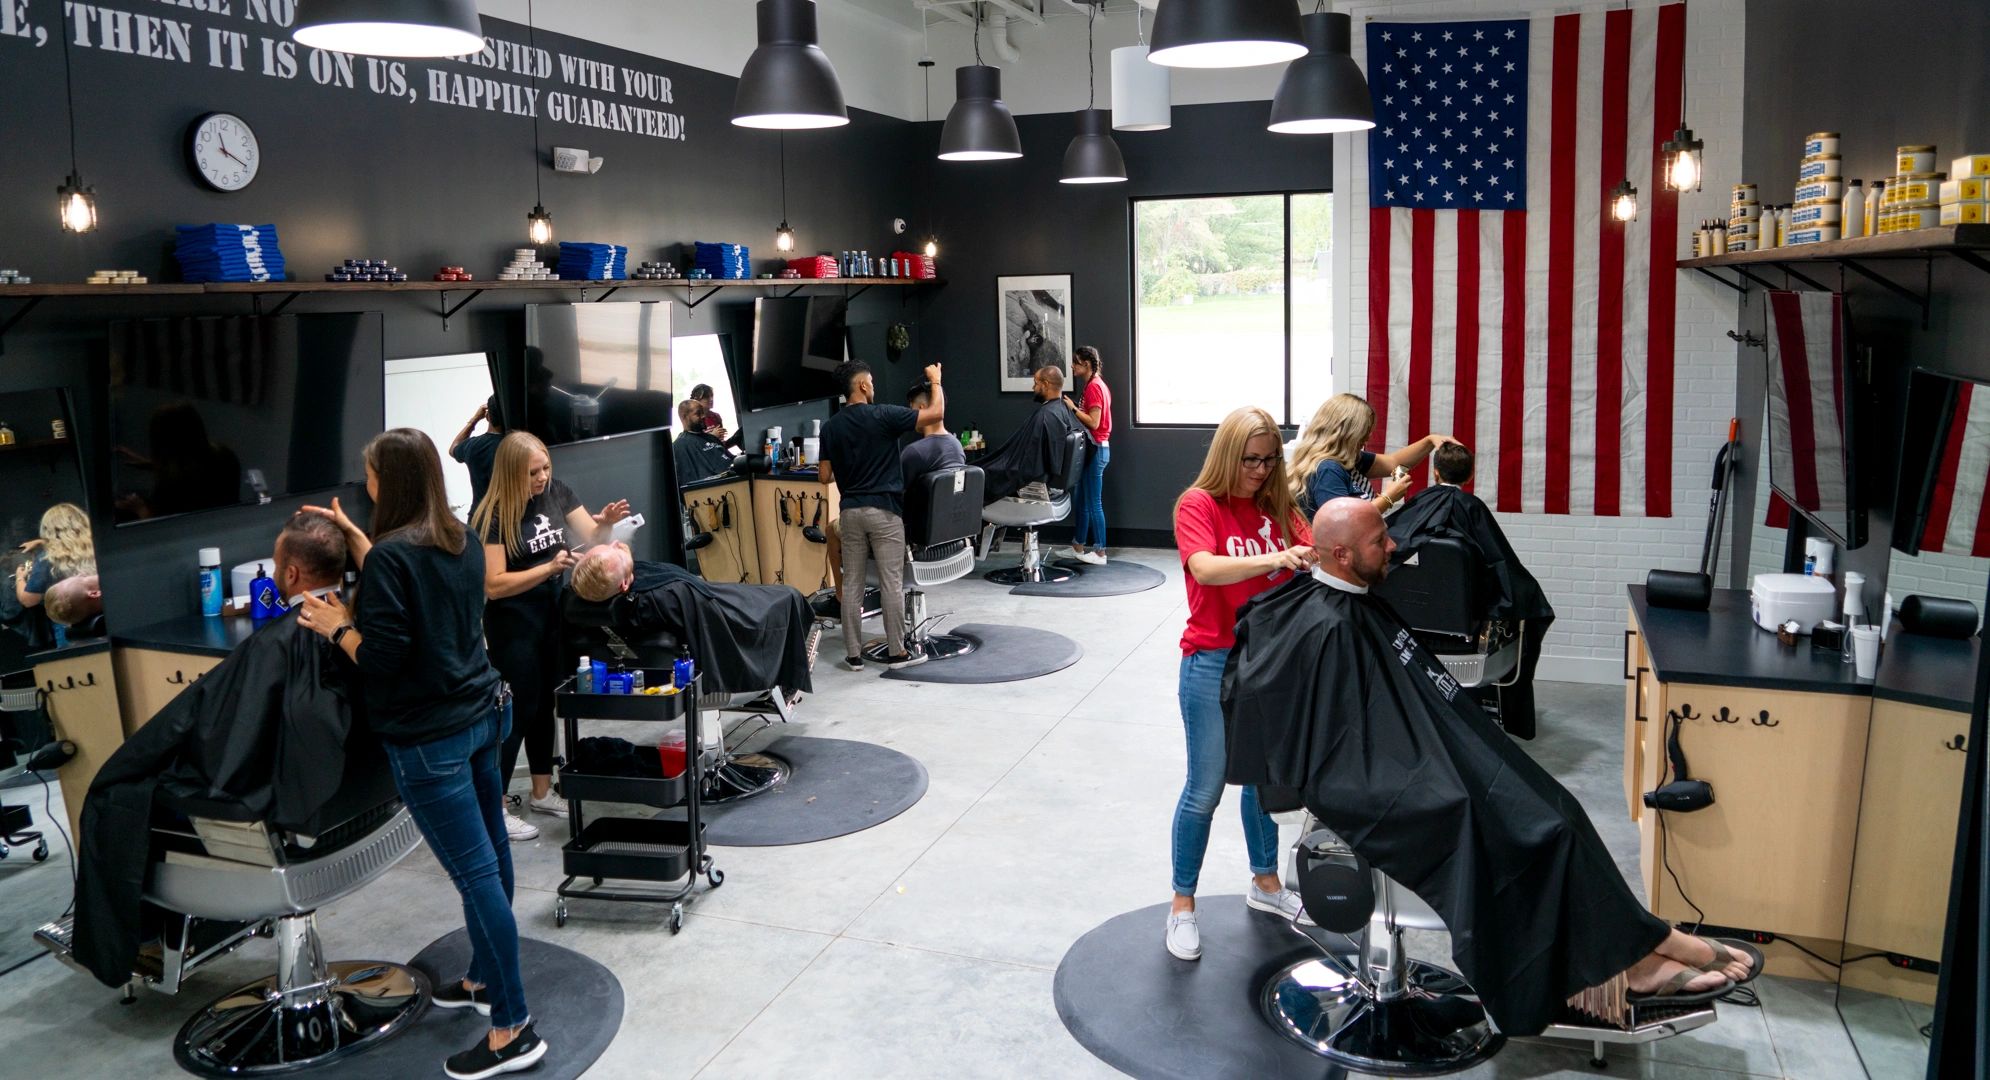 G.O.A.T. Haircuts - Mens Haircuts, Barber Shop, Mens Salon